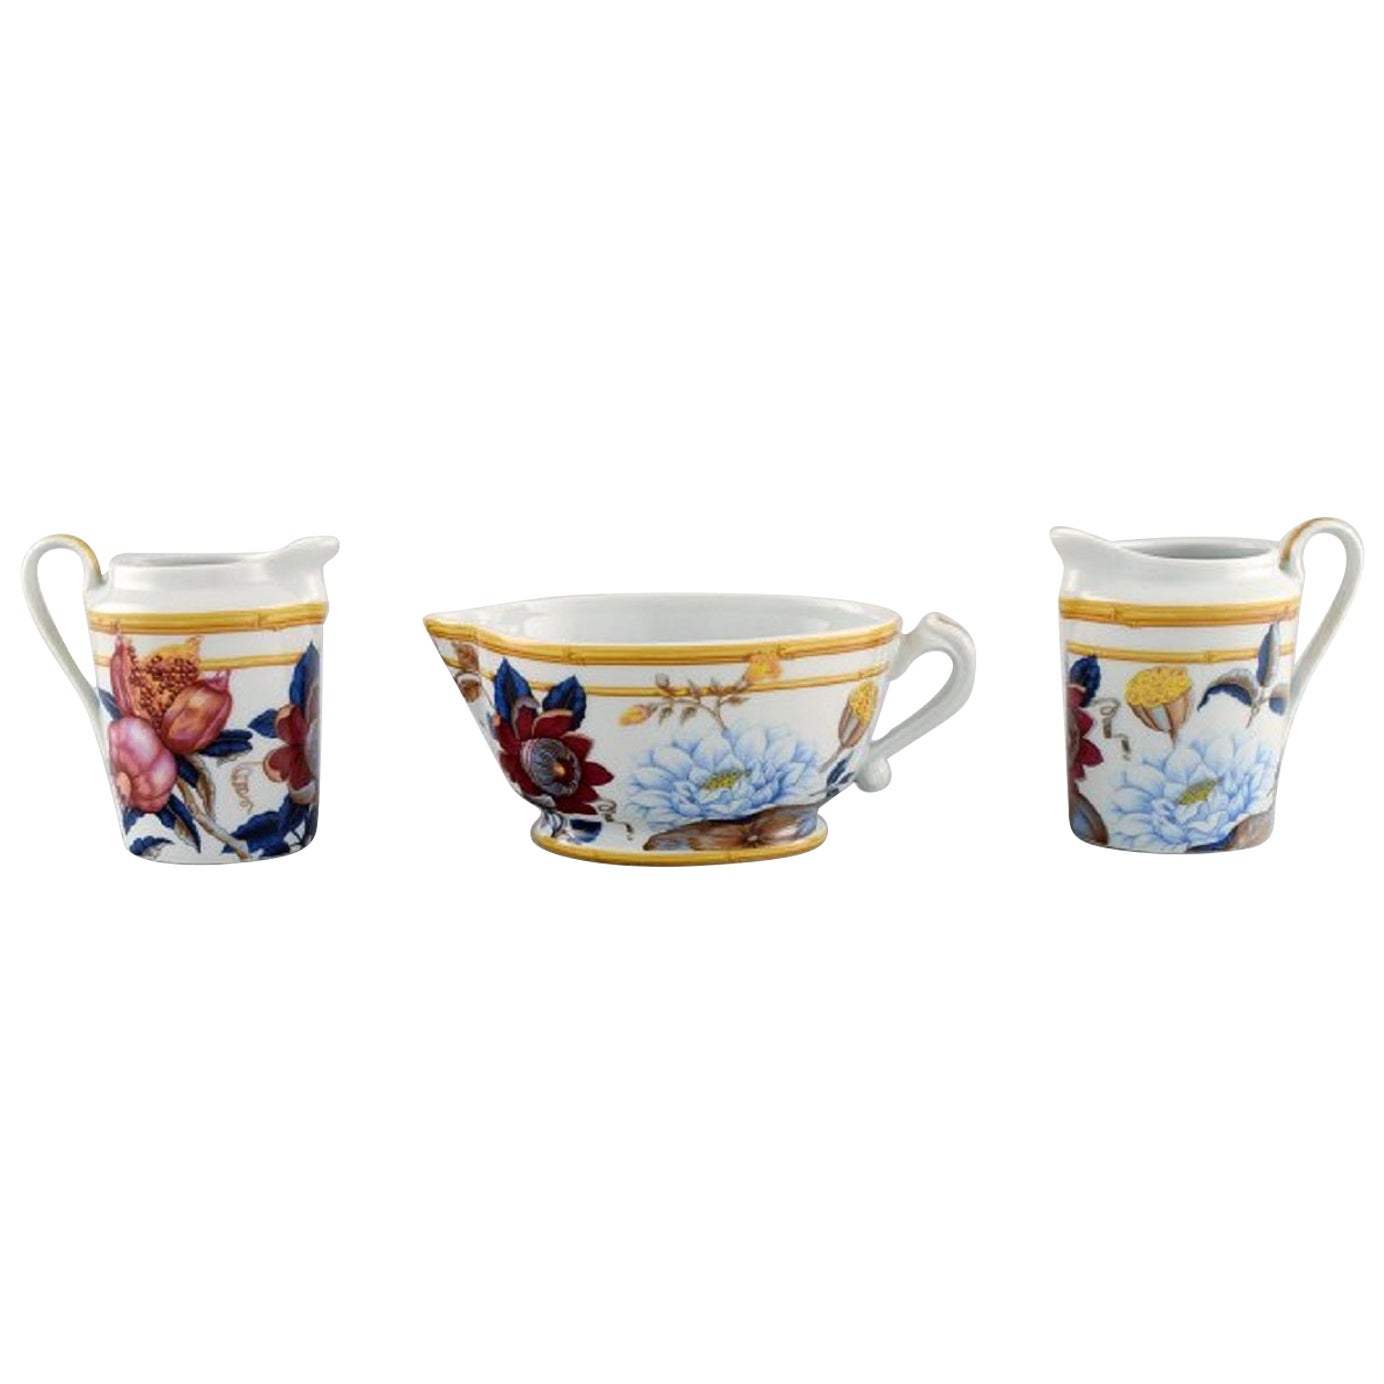 Porcelain of Paris. "Tropical Aurore". Three porcelain jugs with flowers. For Sale